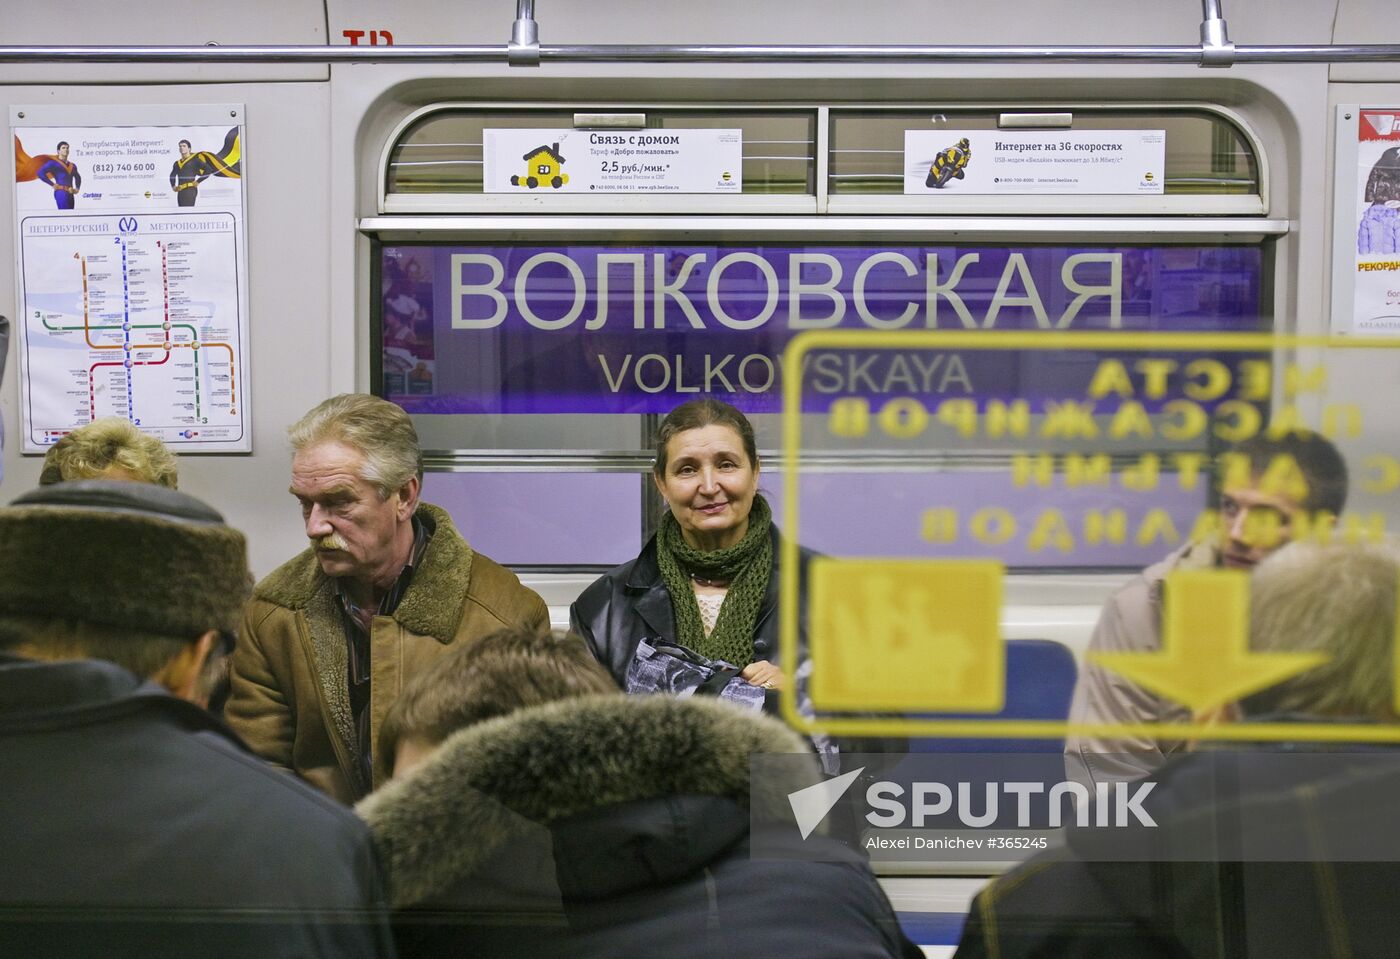 Opening the fifth metro line in St. Petersburg